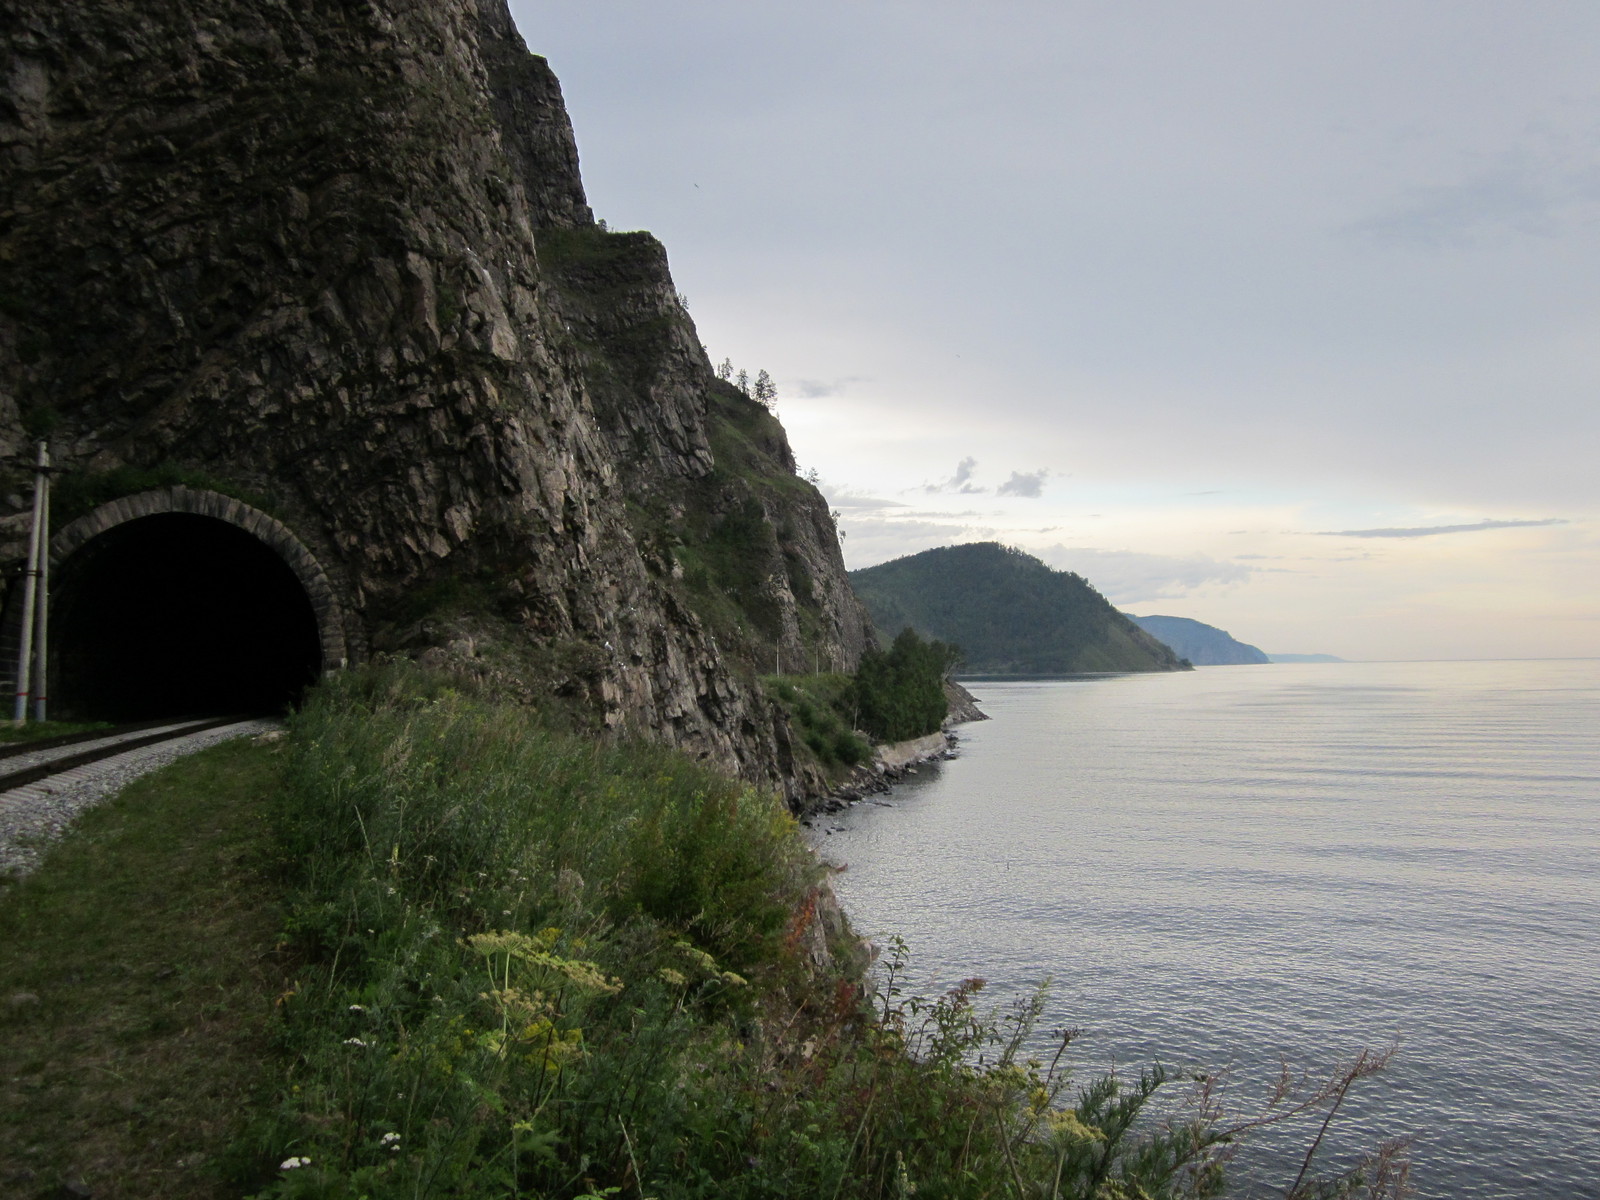 The promised post about Baikal. - My, Travel across Russia, Baikal, Kayak, The photo, Longpost, Video